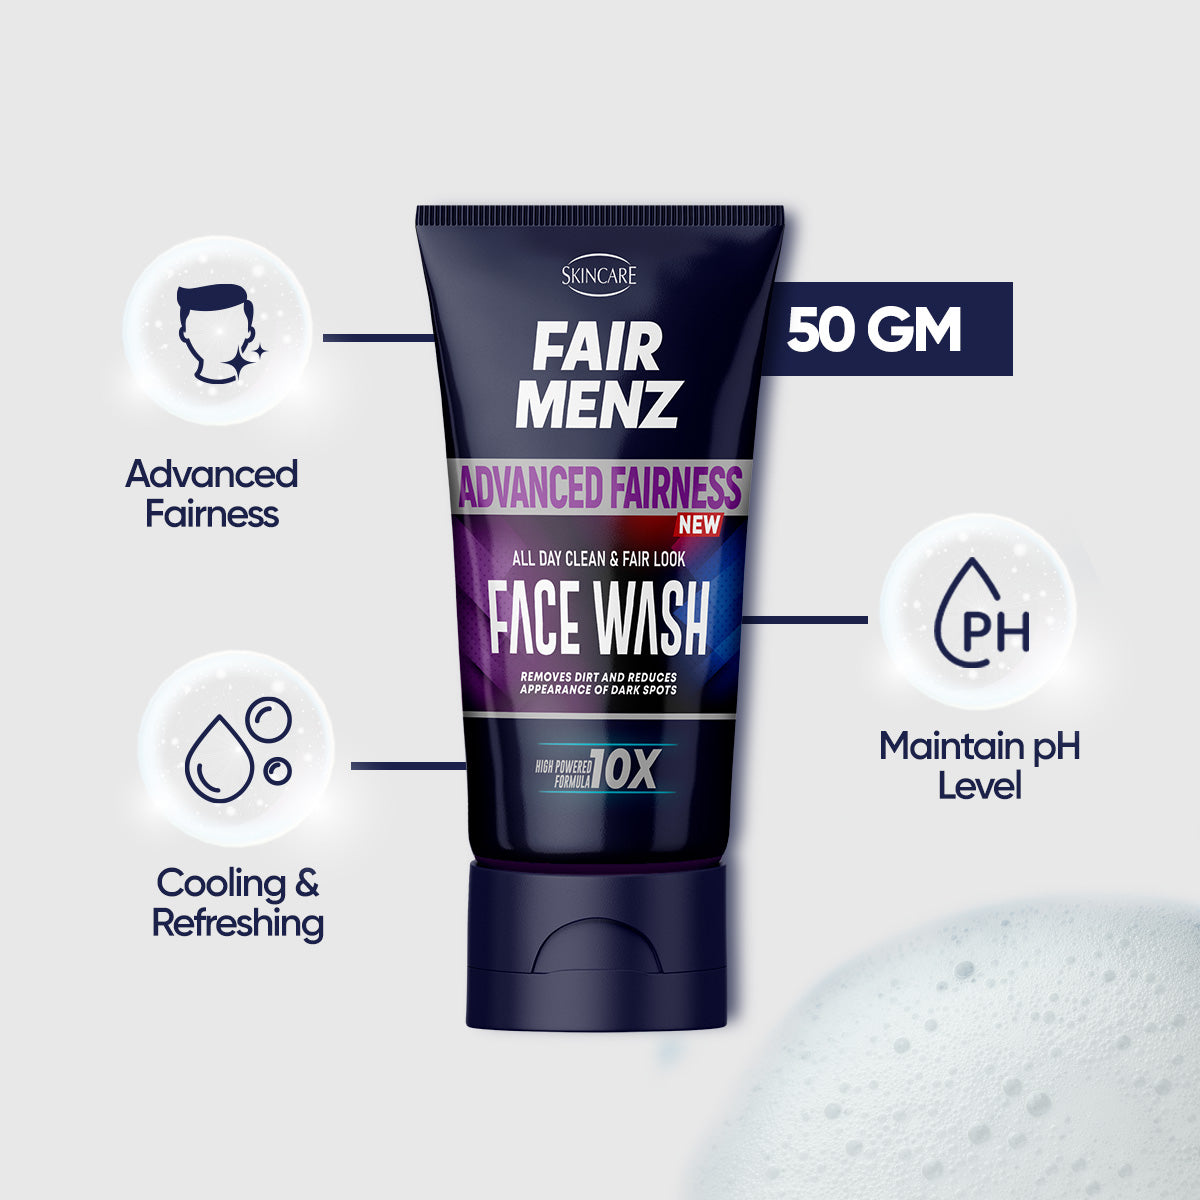 Fair Menz Advance Fairness Face wash 10X Formula